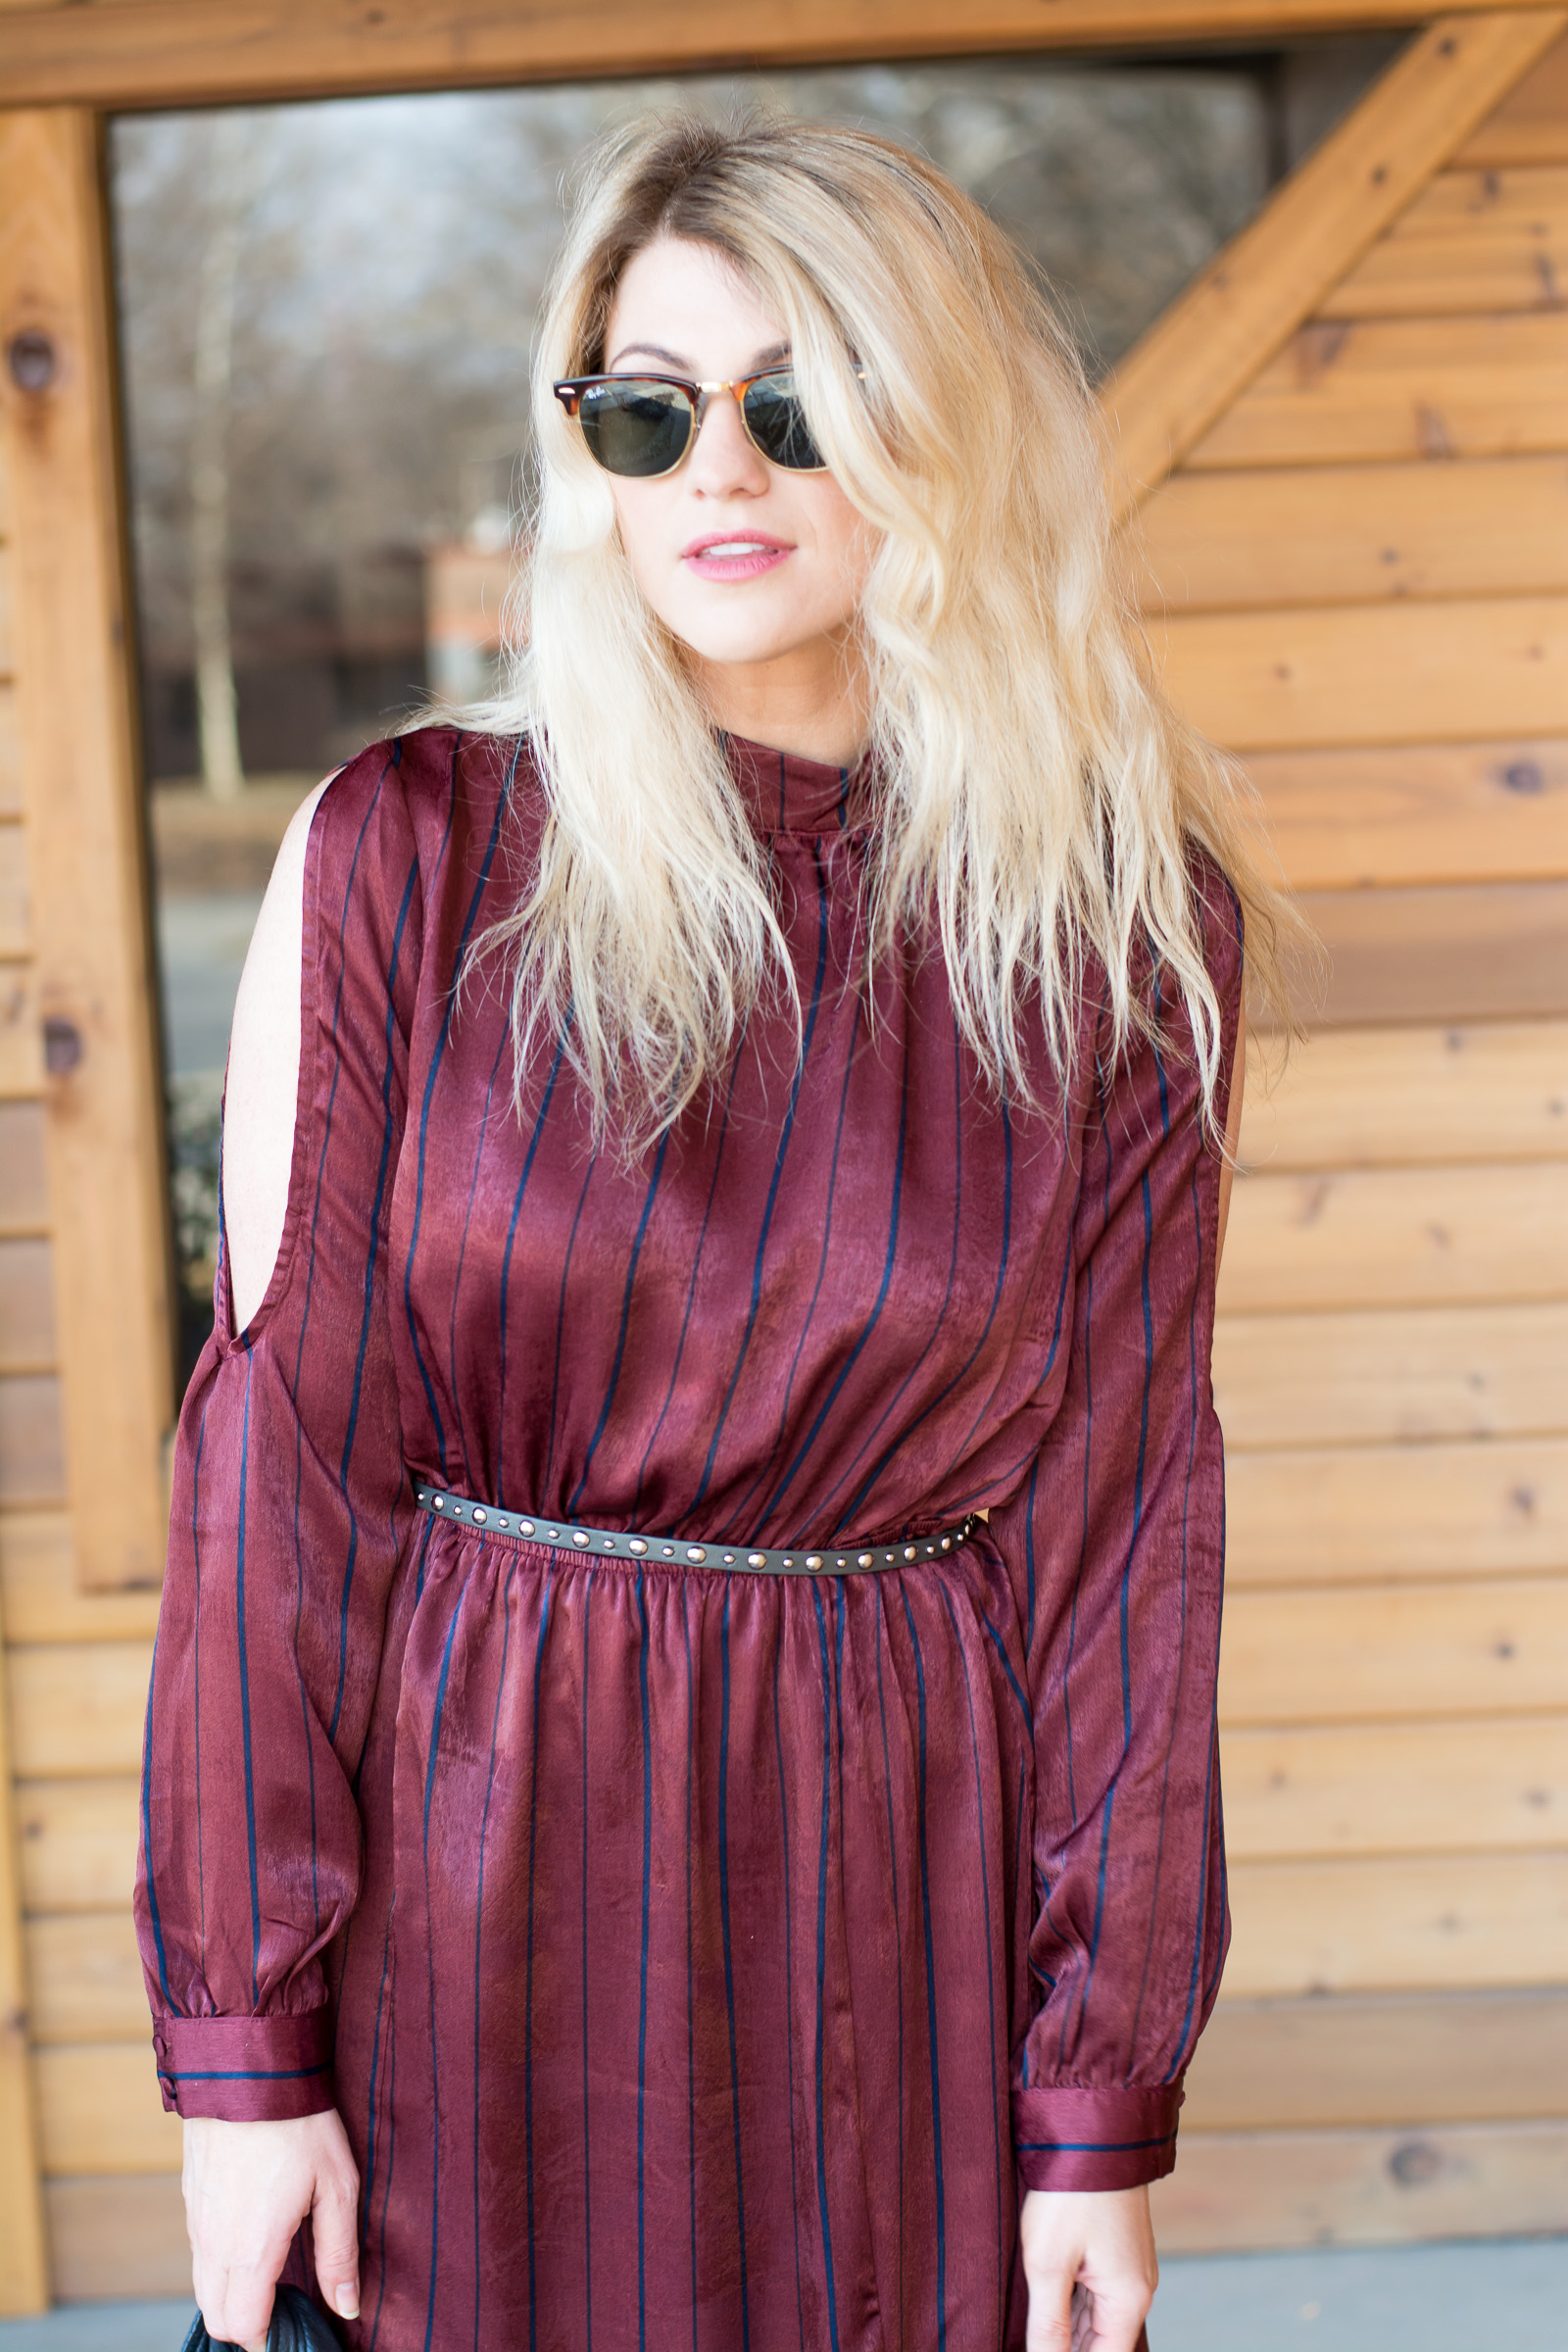 Burgundy Striped Satin Maxi Dress. | Ashley from LSR